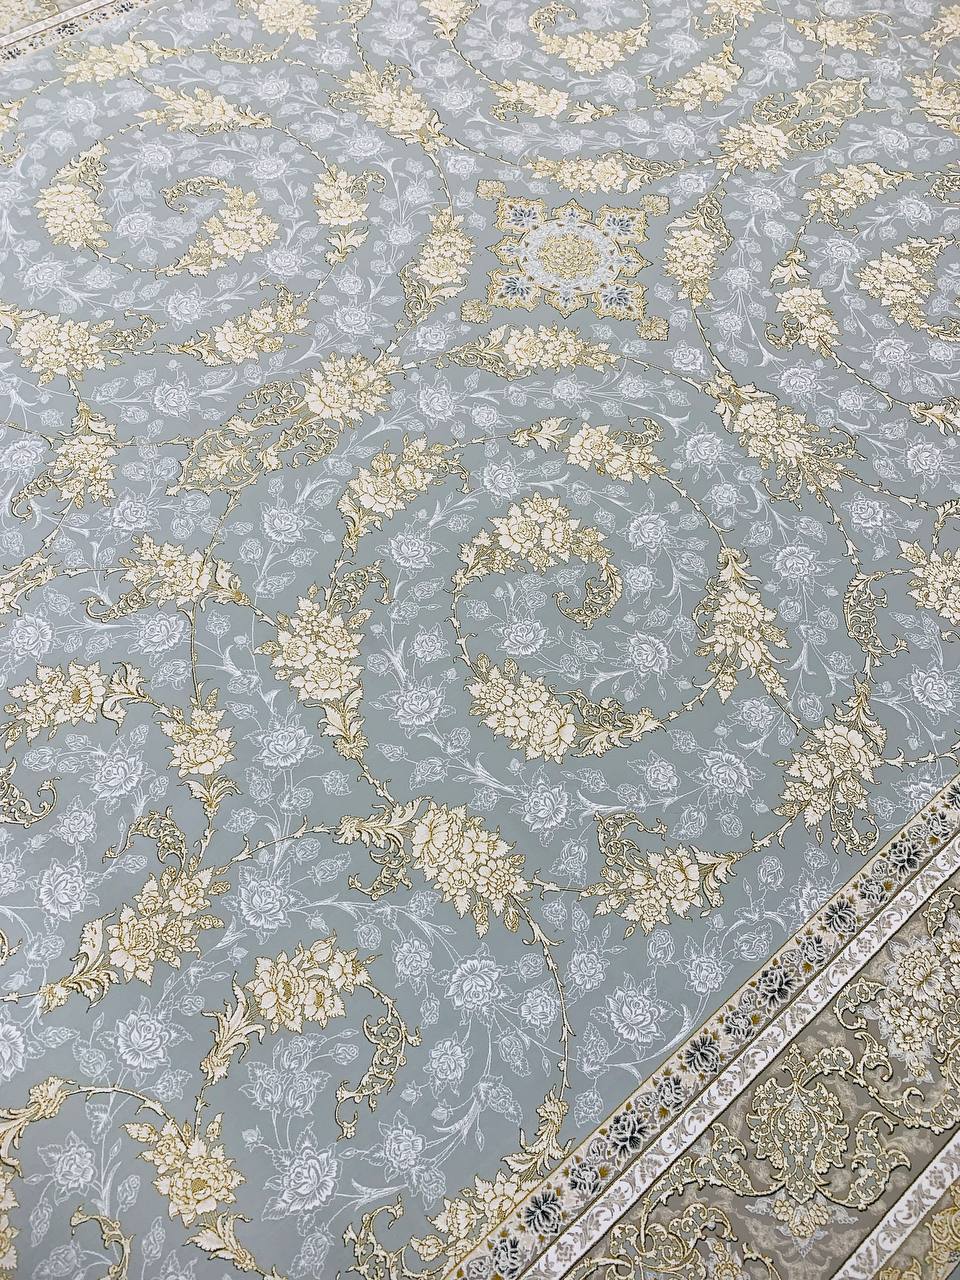 Carpet 1200 comb, density 3600, Rosita silver design, ten colors